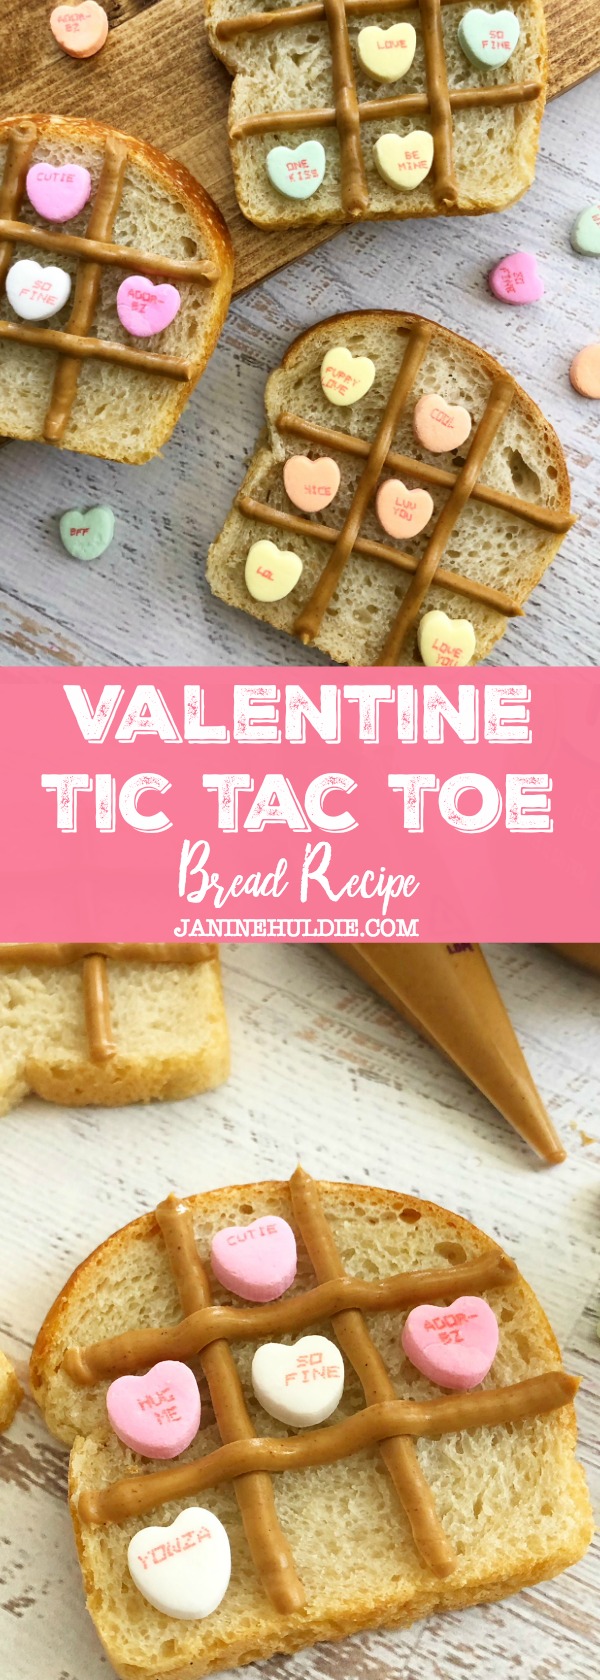 Valentine Tic Tac Toe Bread Recipe